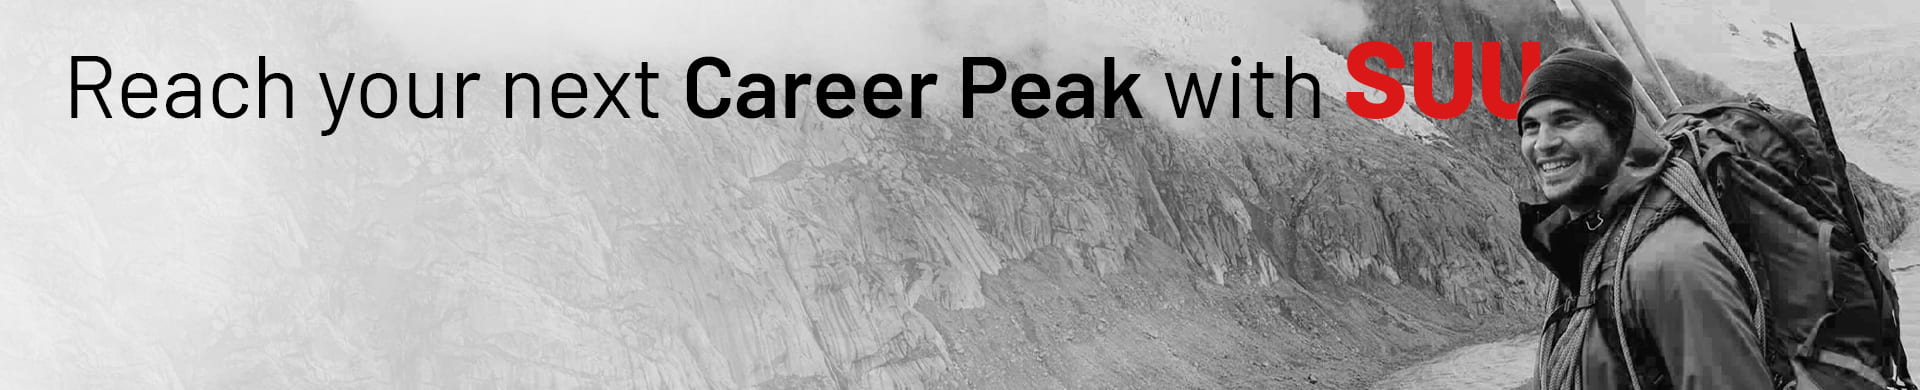 Reach your next career peak with SUU